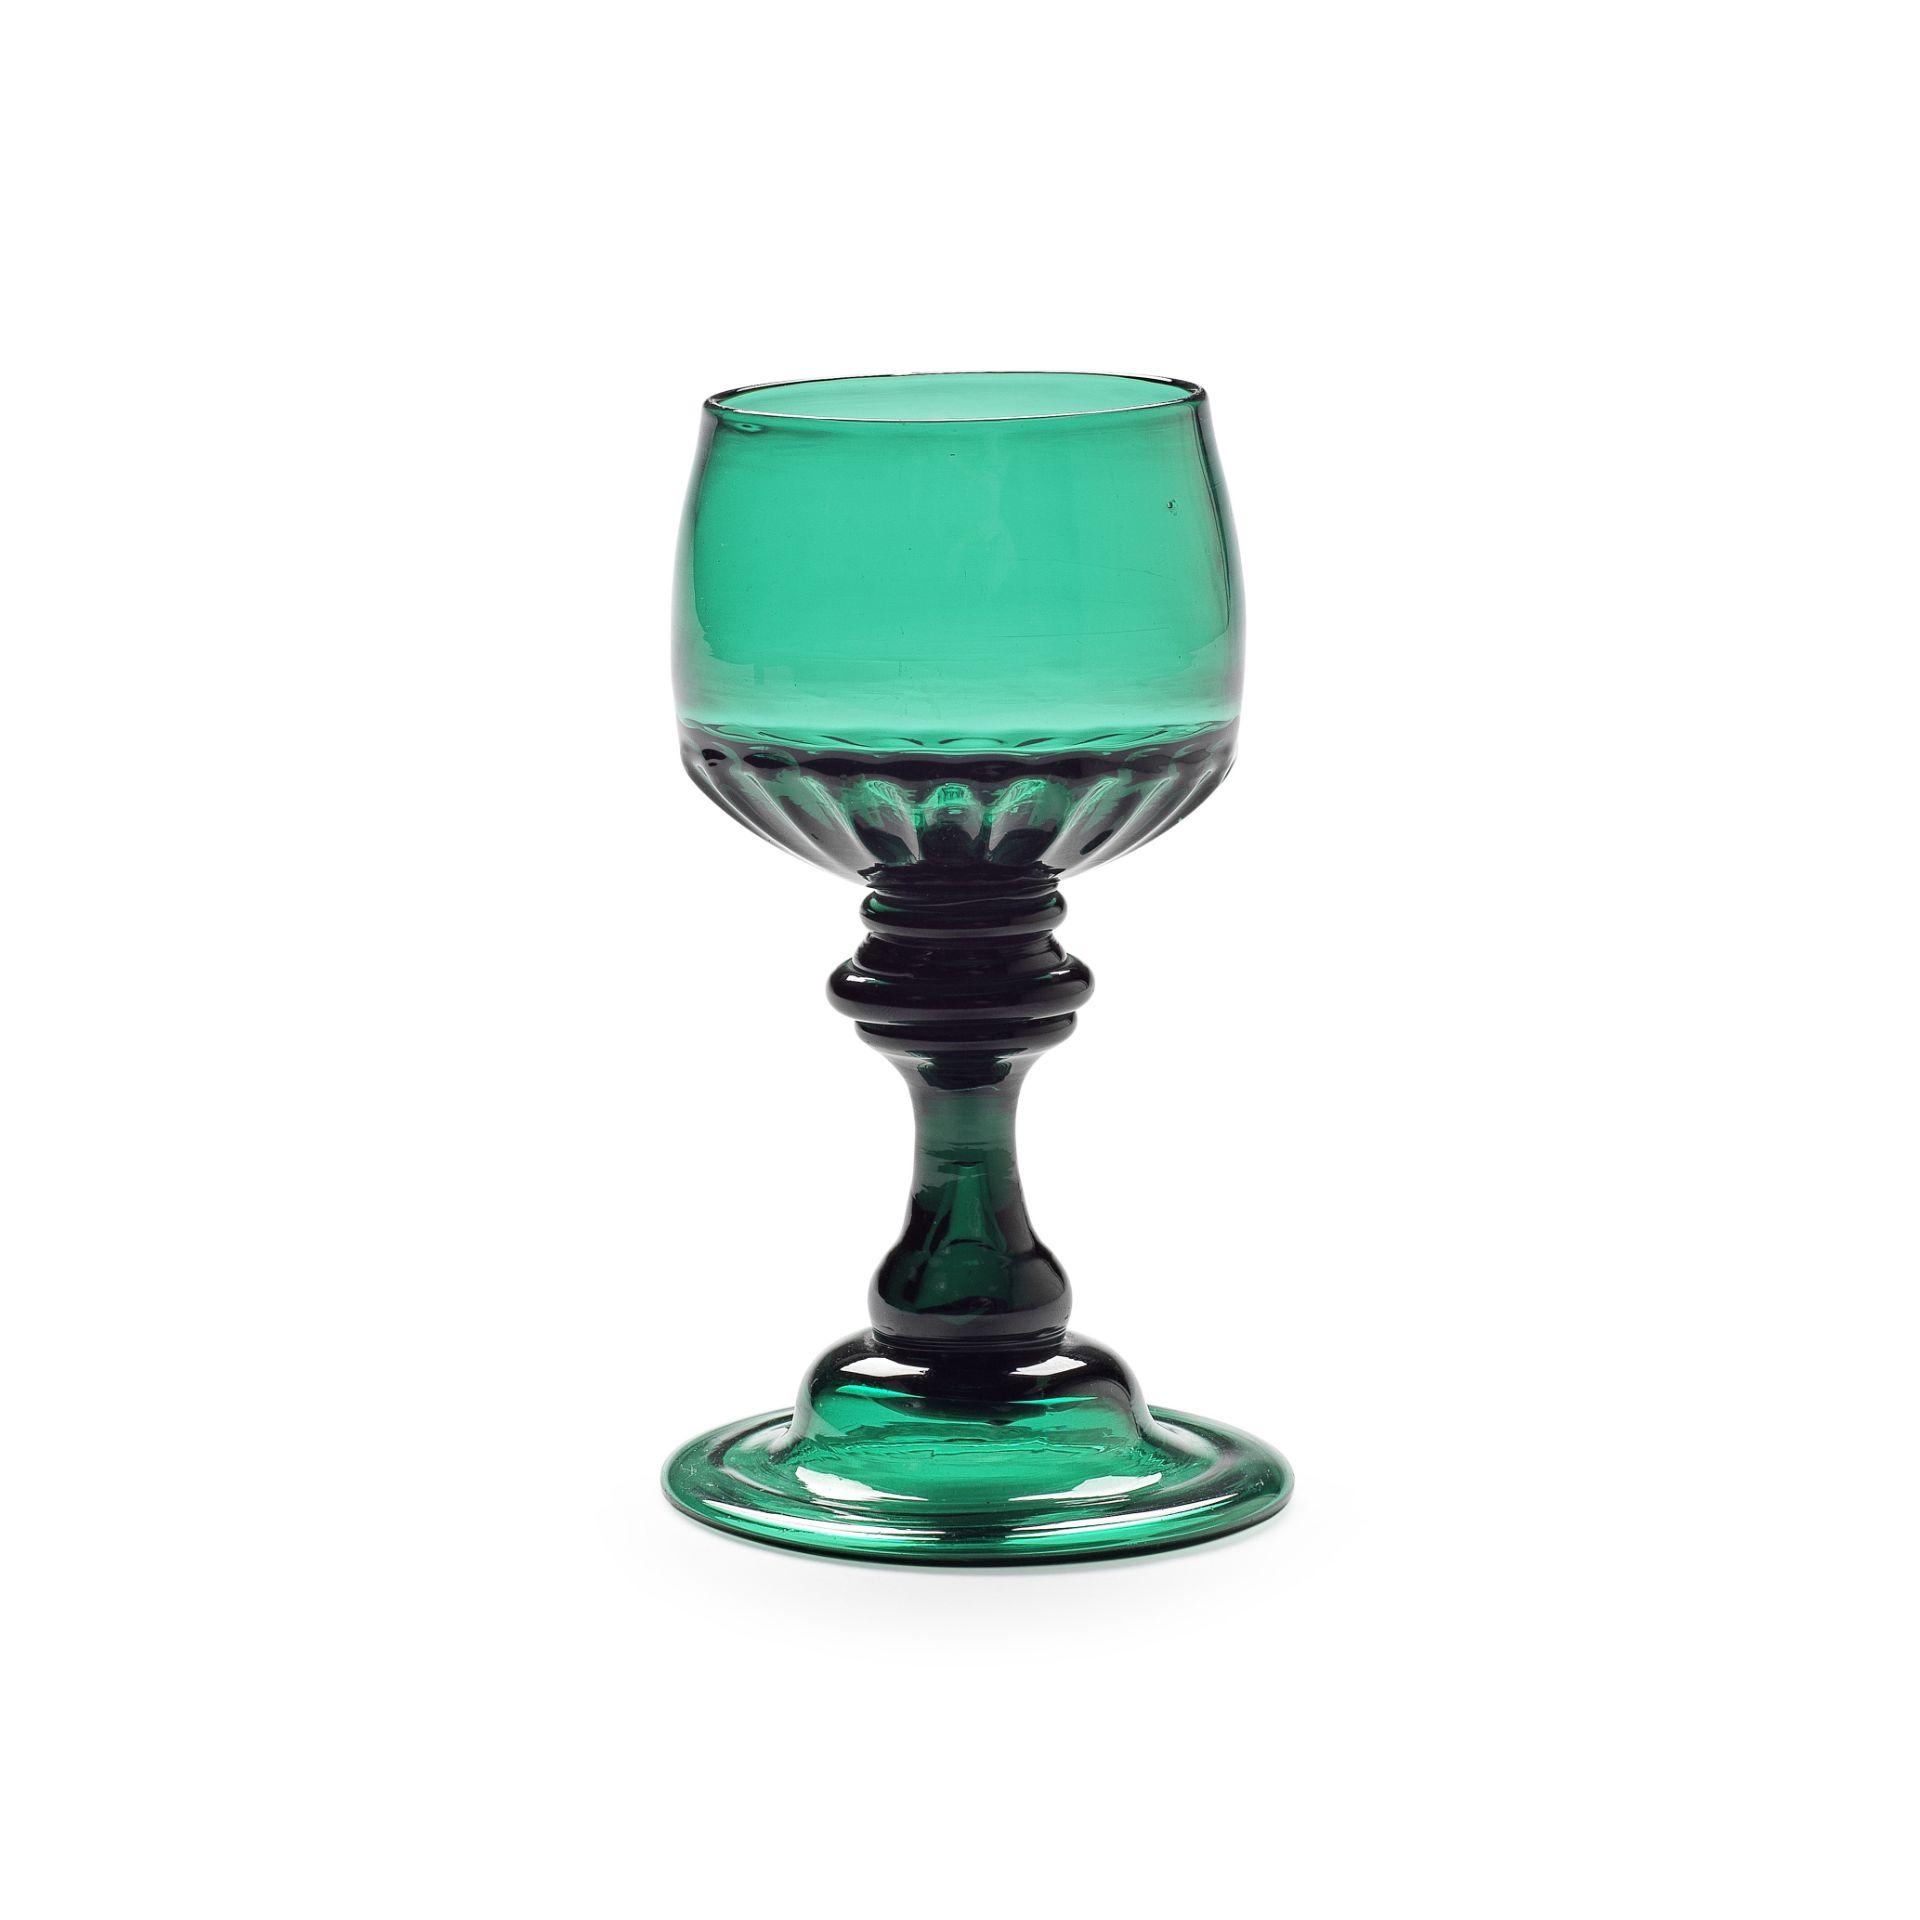 A rare emerald-green baluster mead or champagne glass, circa 1740-60